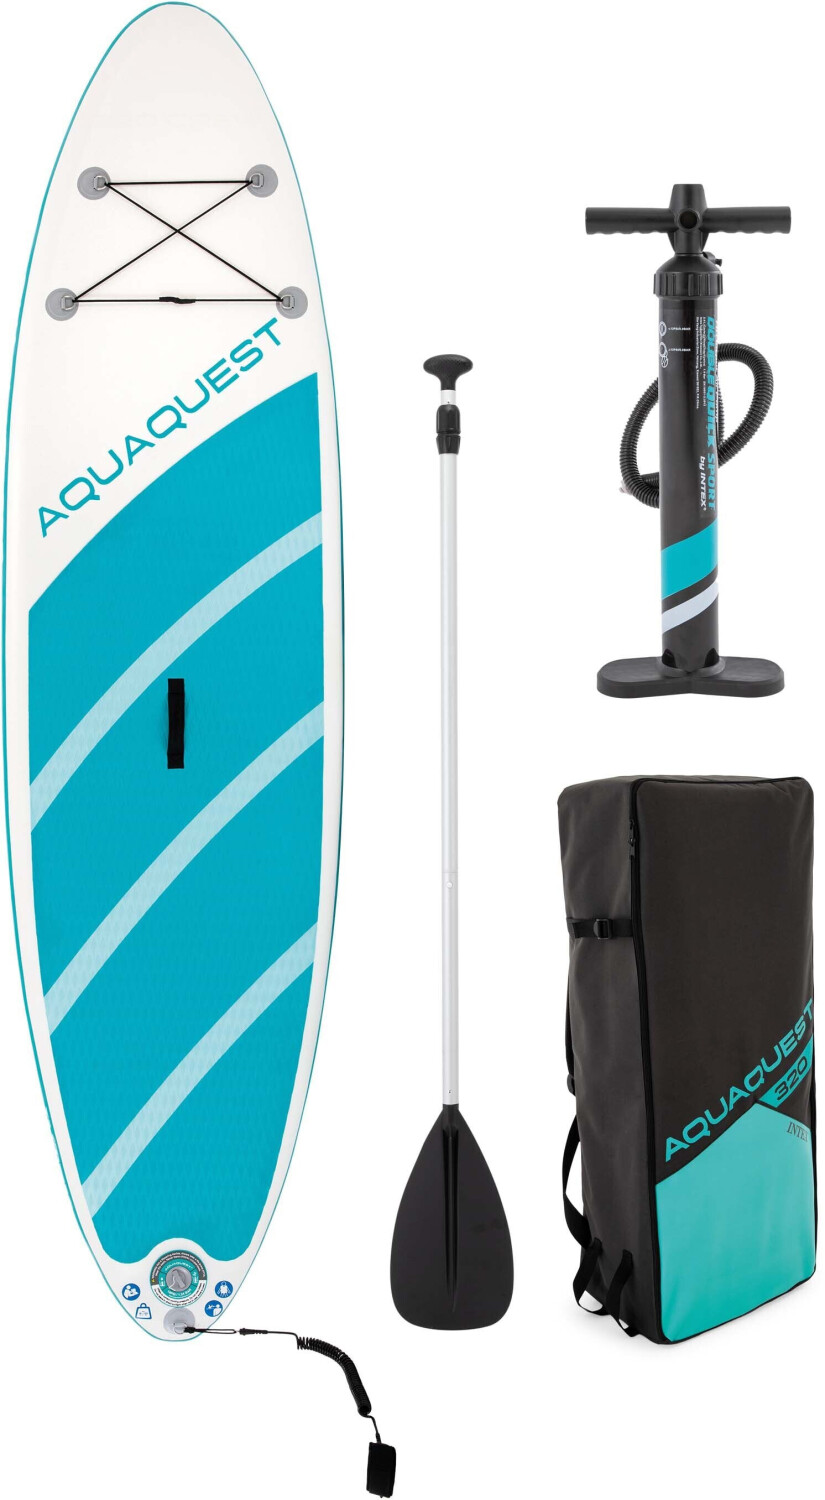 Intex Aqua Quest 320 Preisvergleich | bei SUP Board ab 261,11 € Aufblasbares